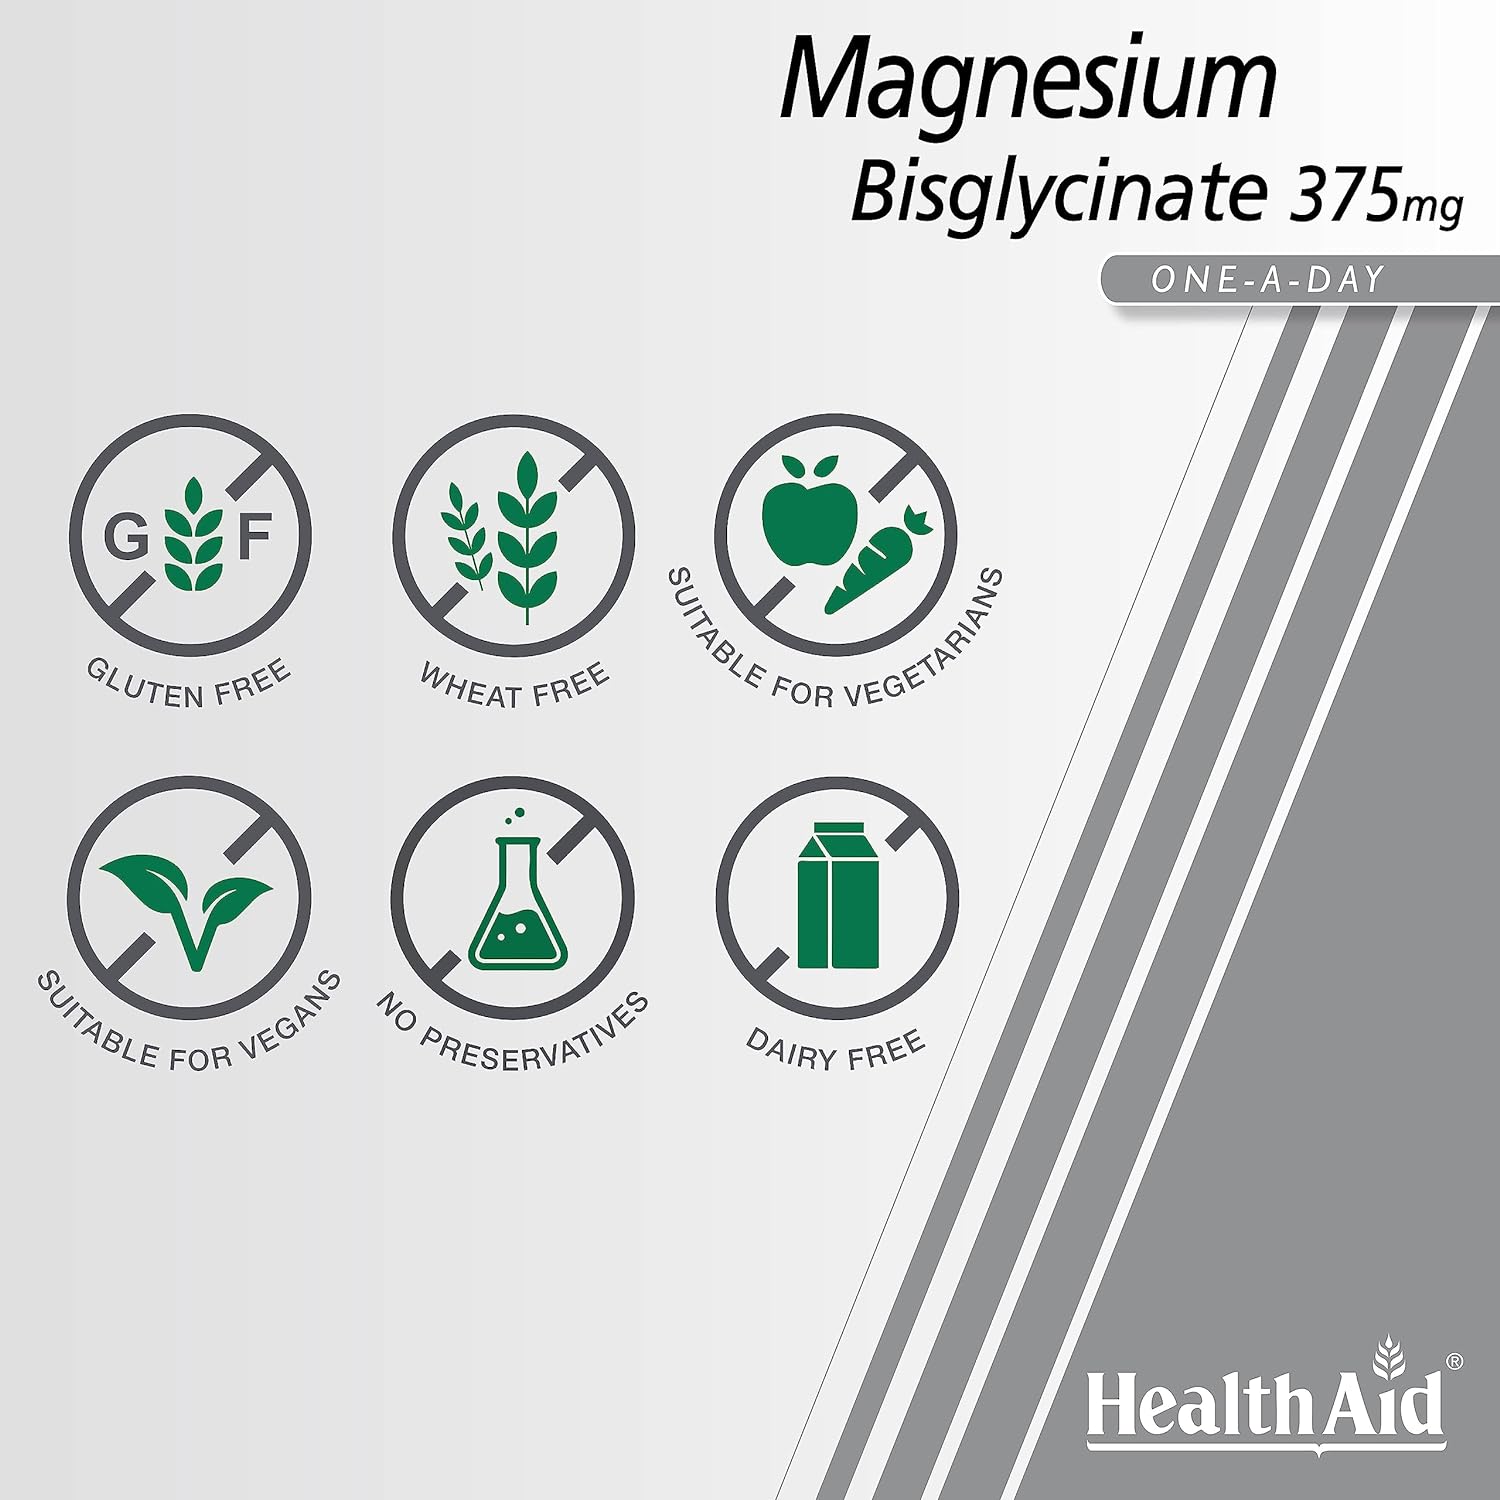 HealthAid Magnesium Bisglycinate Vegan Tablets, 60-Count

